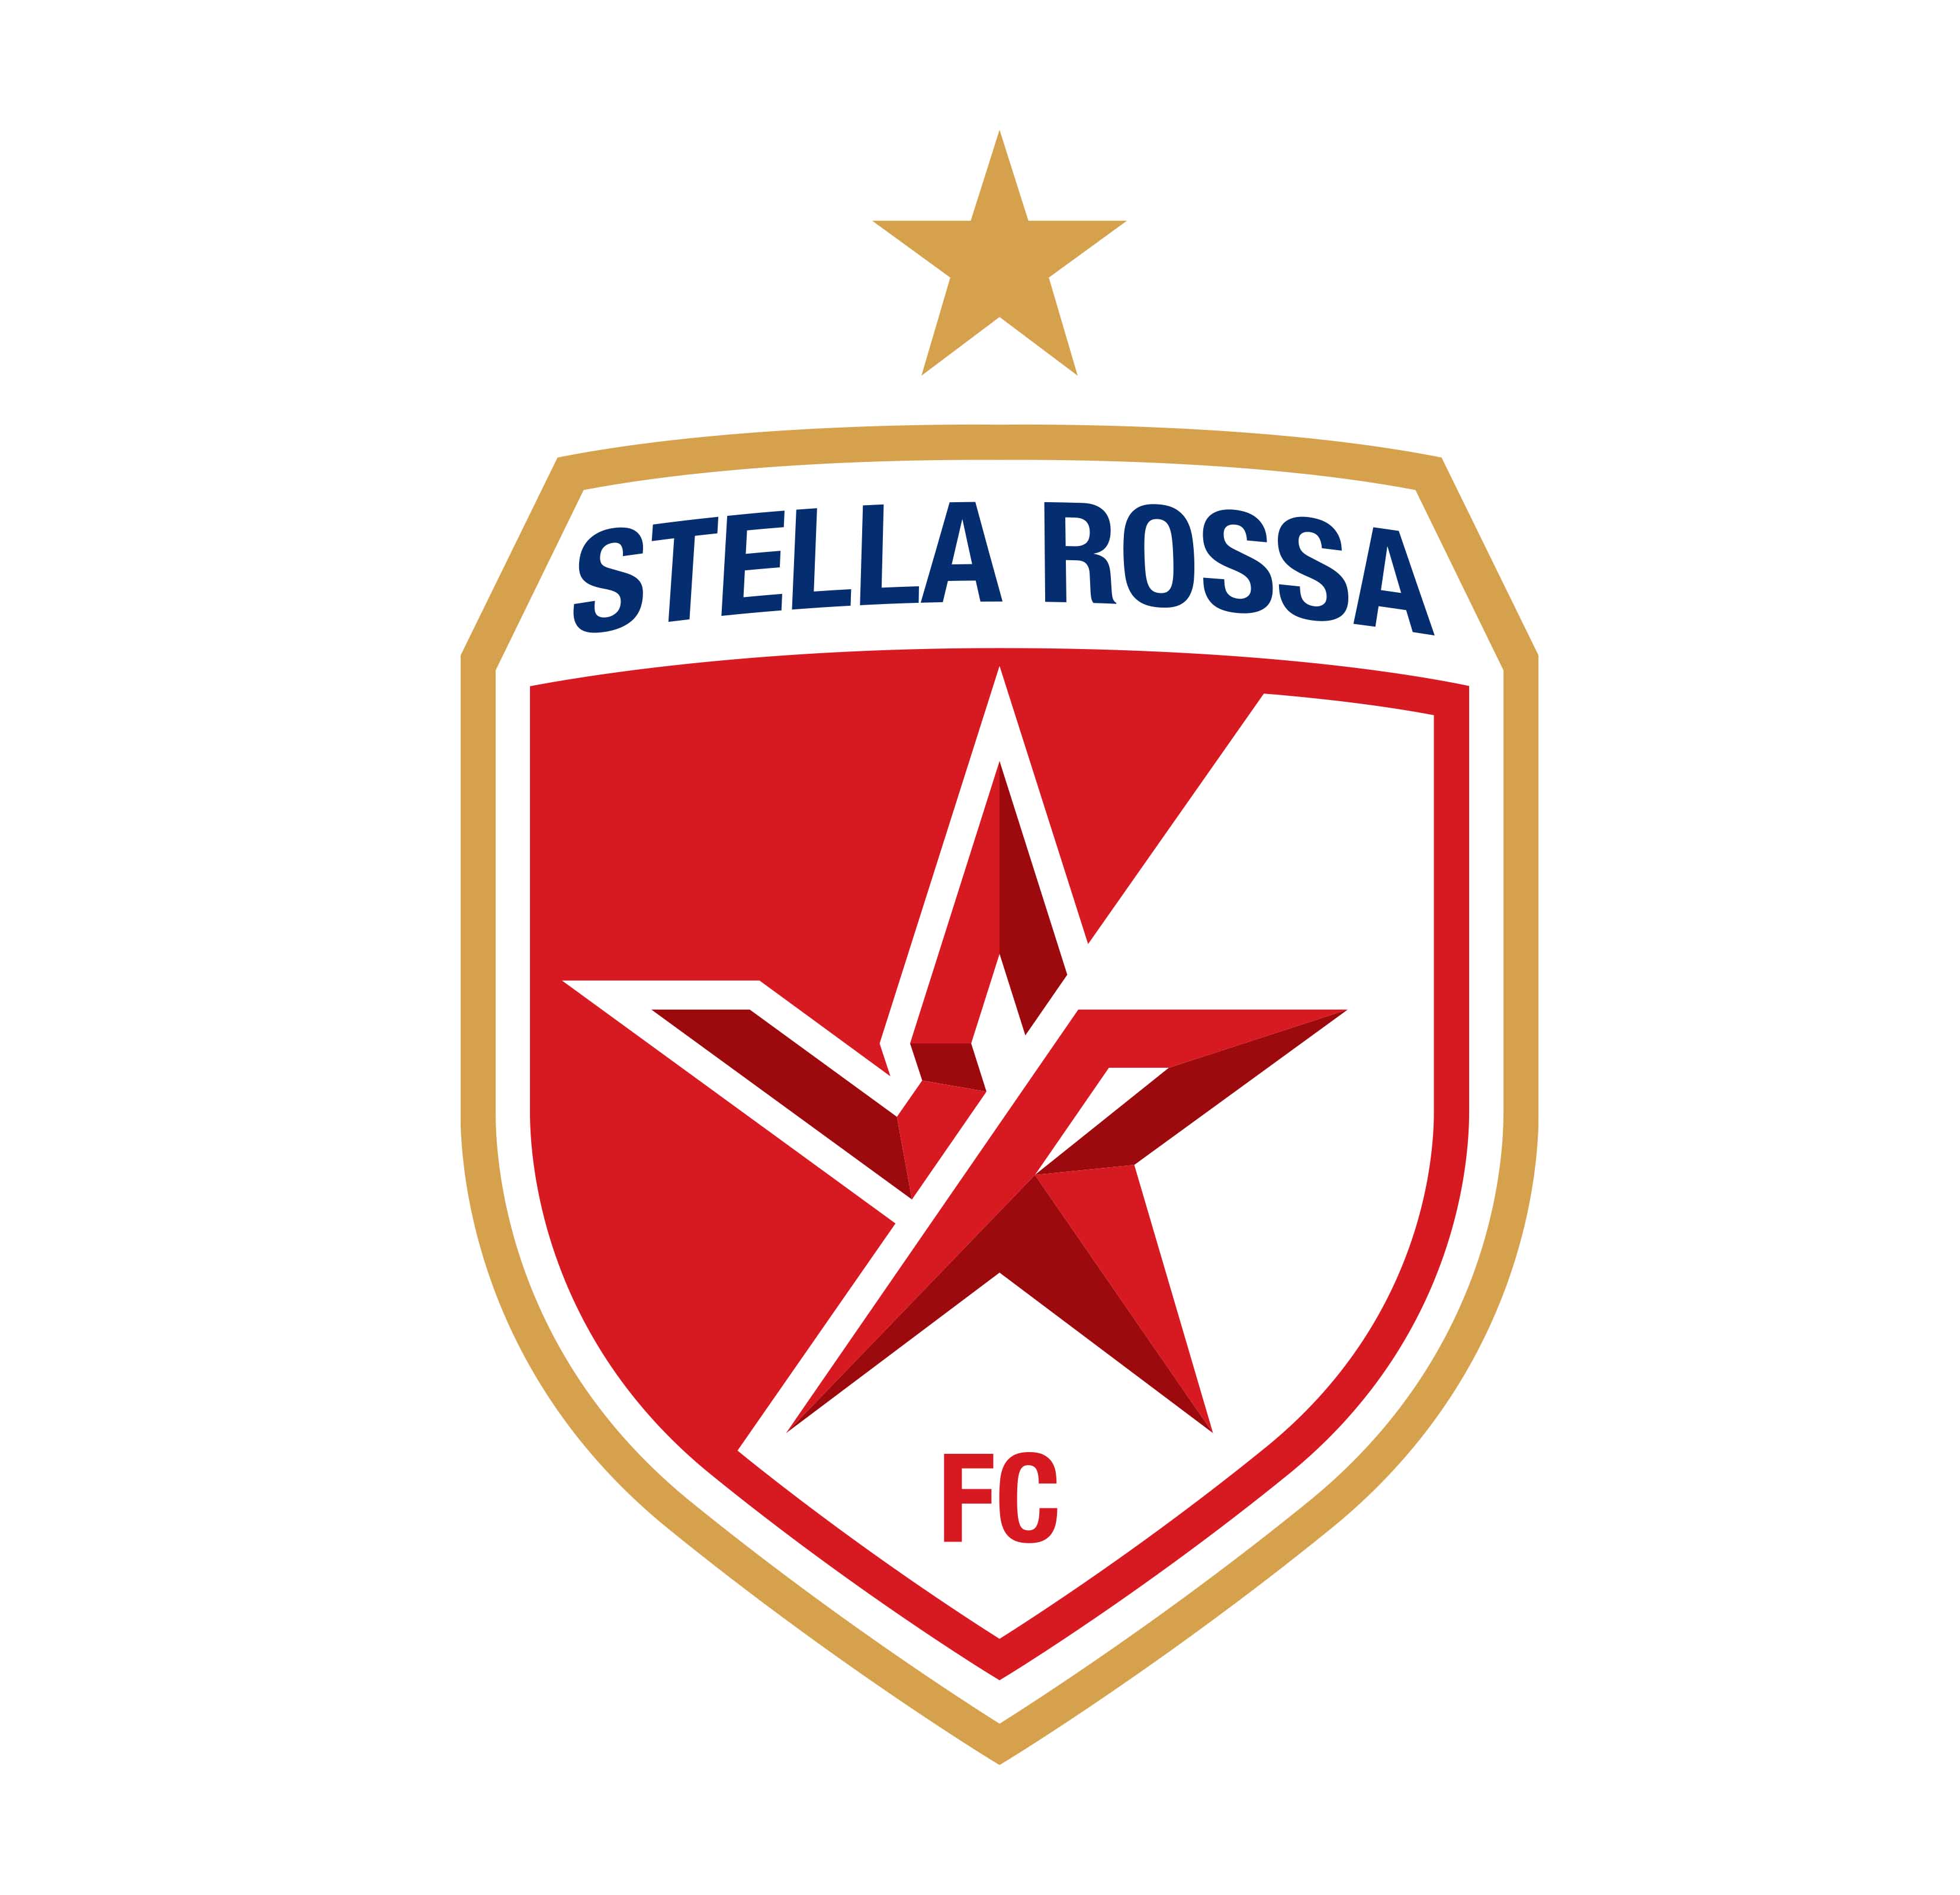 Stella Rossa Football Club